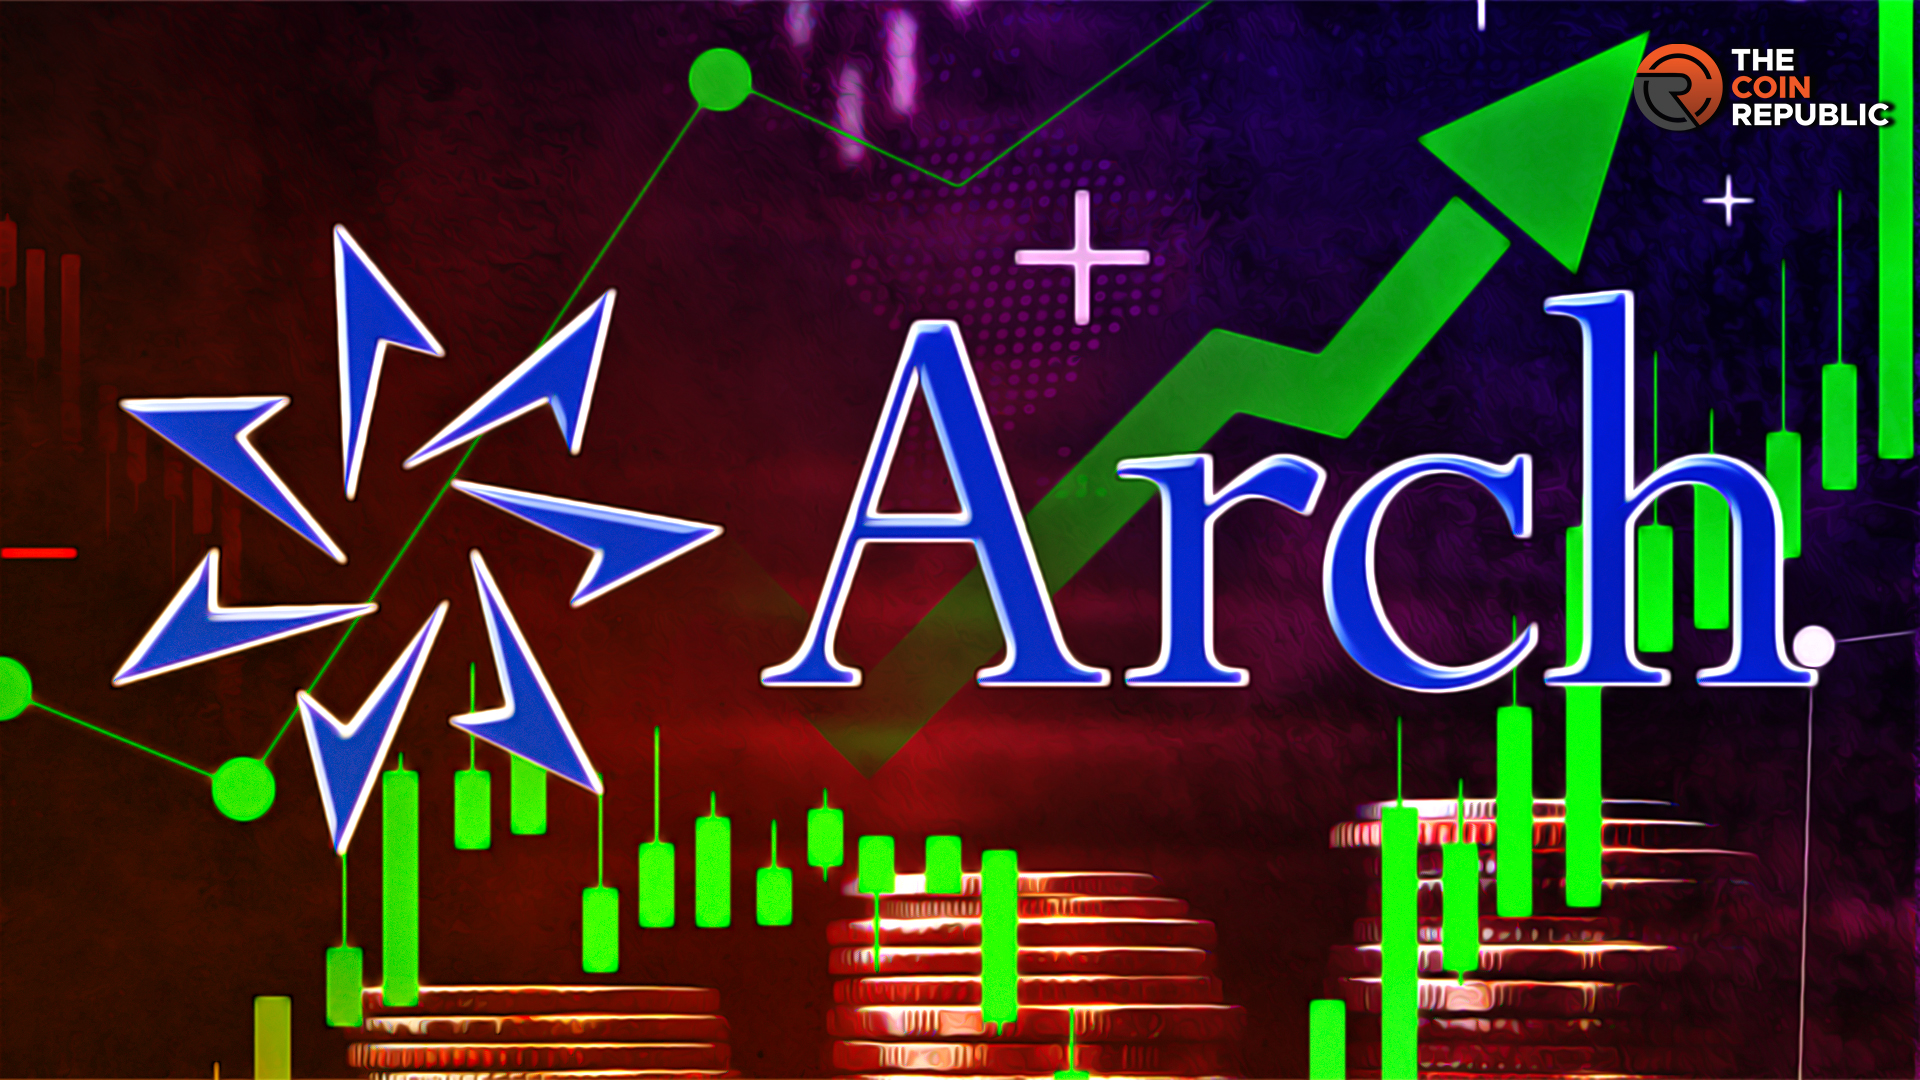 ACGL Stock Forecast: Can (NASDAQ: ACGL) Price Surpass $100 Mark?